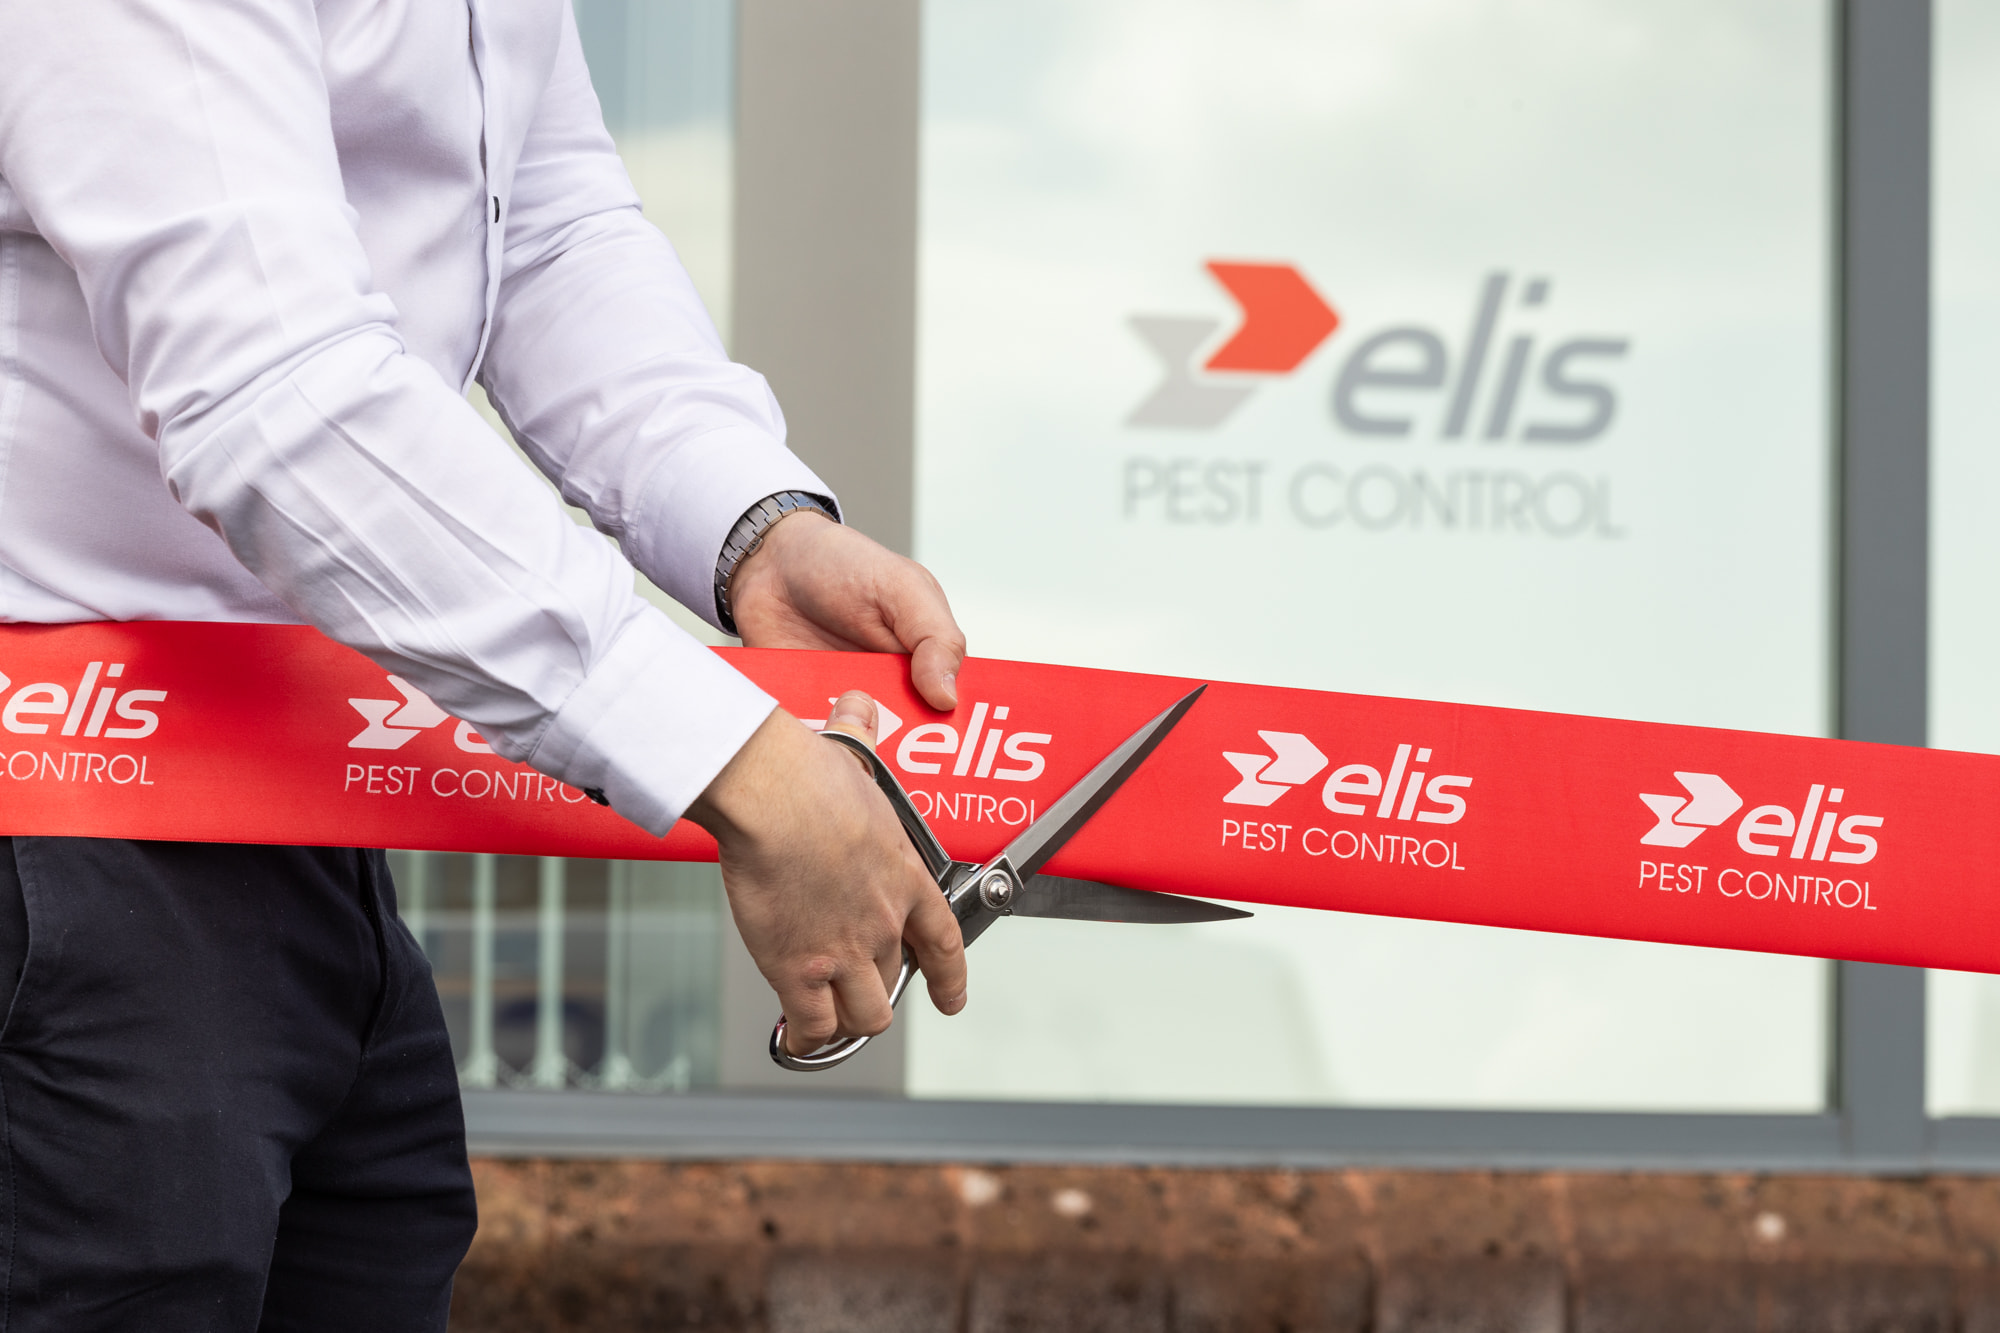 Elis Pest Control Northern Ireland Opens!